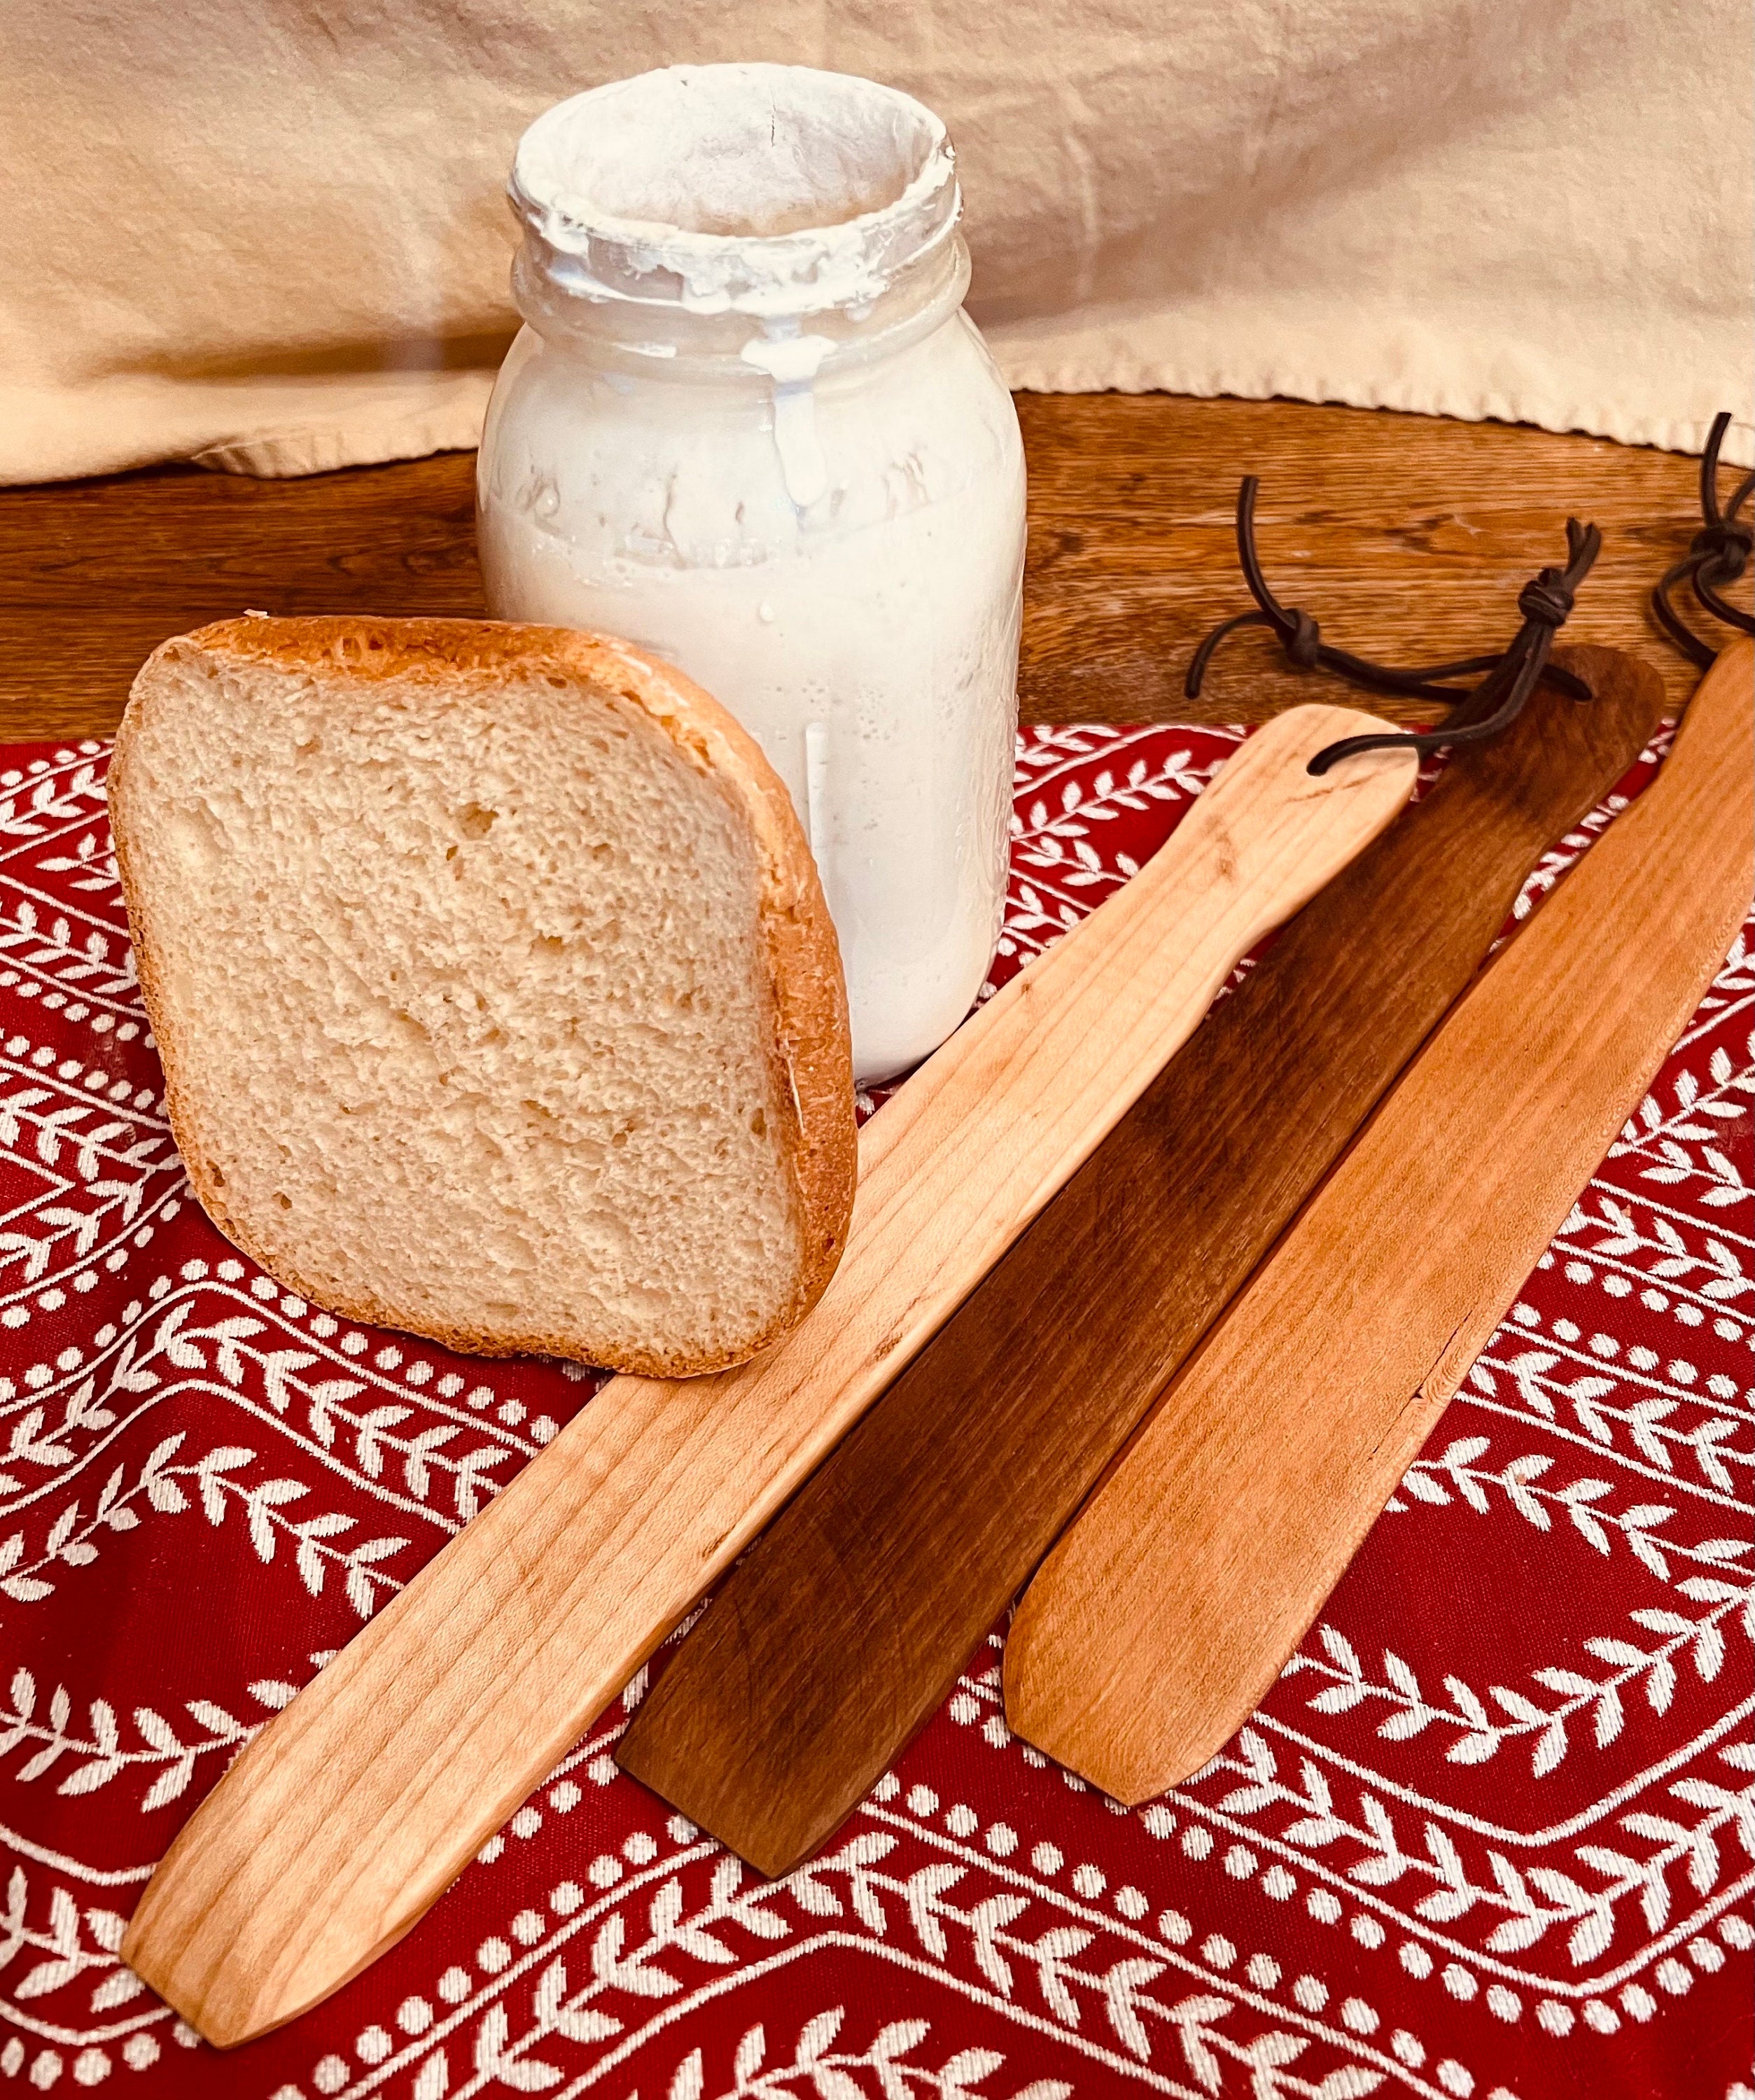 Sourdough Bread Mixing Stir Stick Round Spurtle for Porridge – Wild Cherry  Spoon Co.